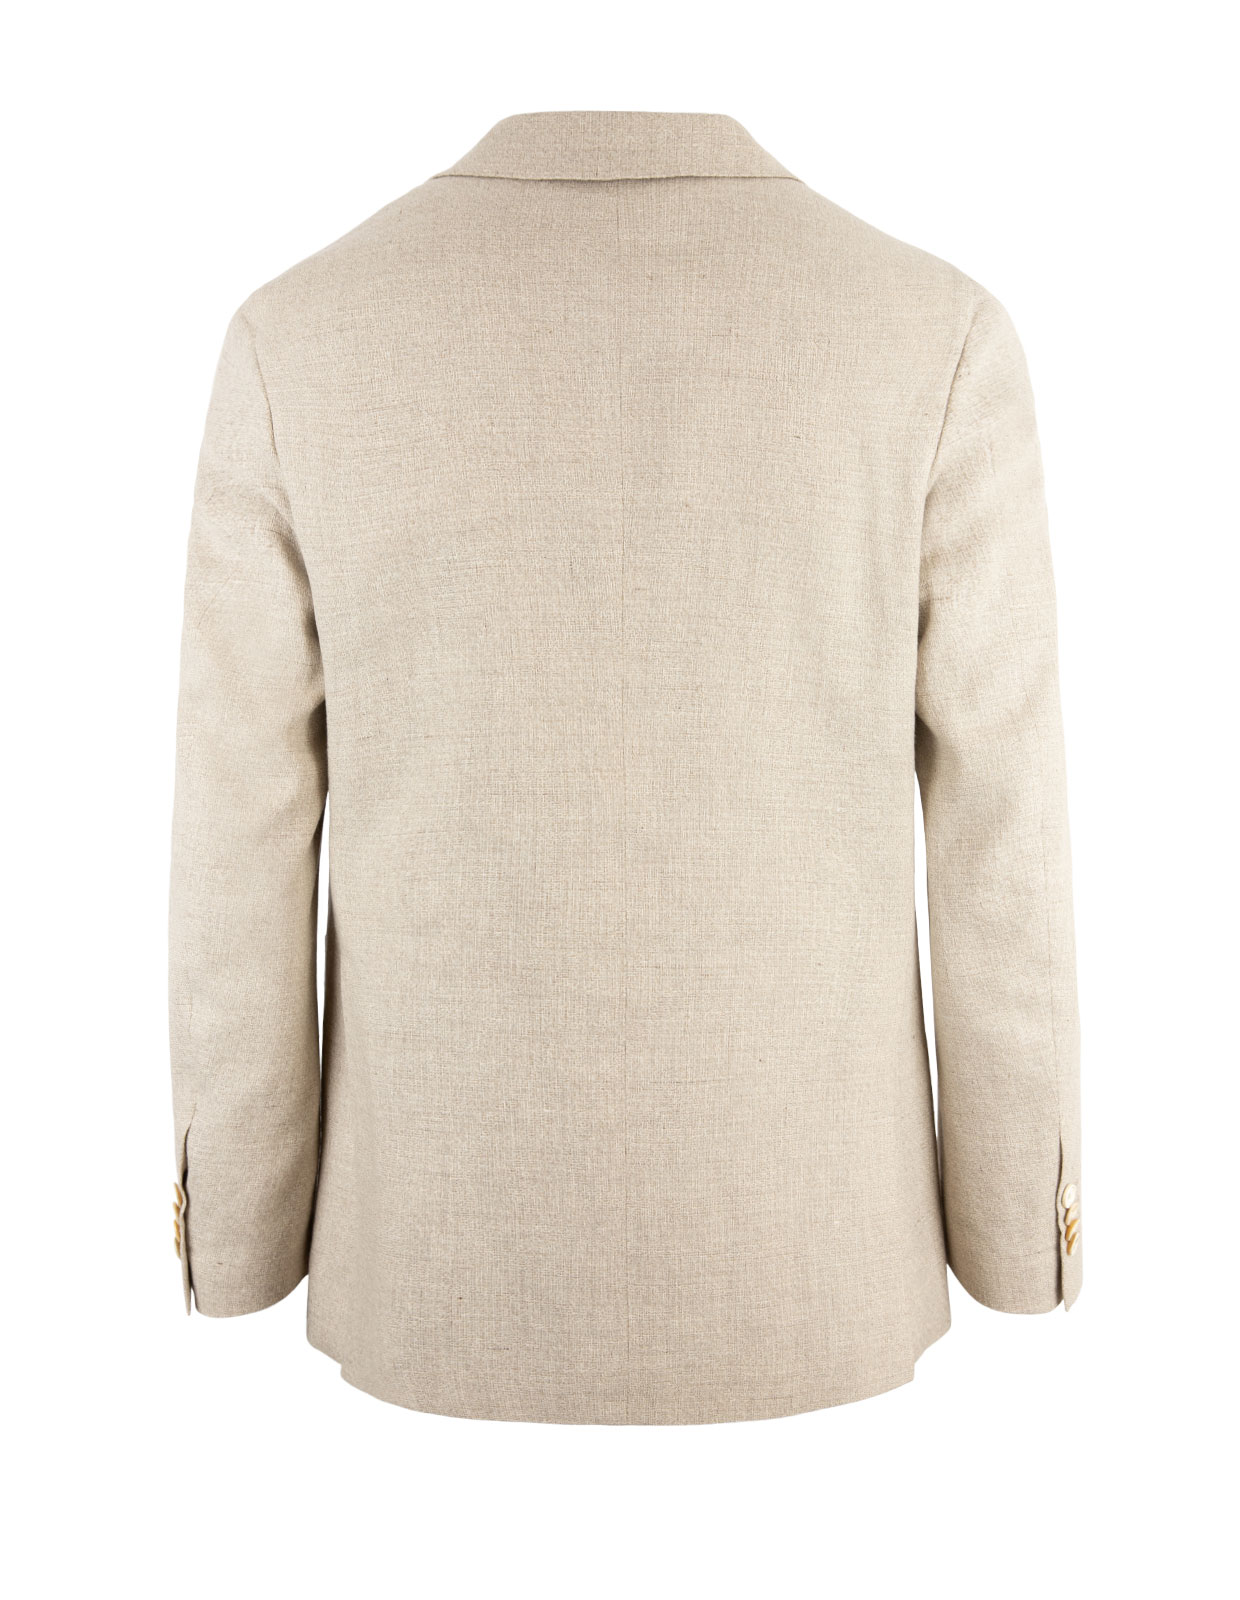 Tosca Jacket Cotton Linen Wool Light Sand